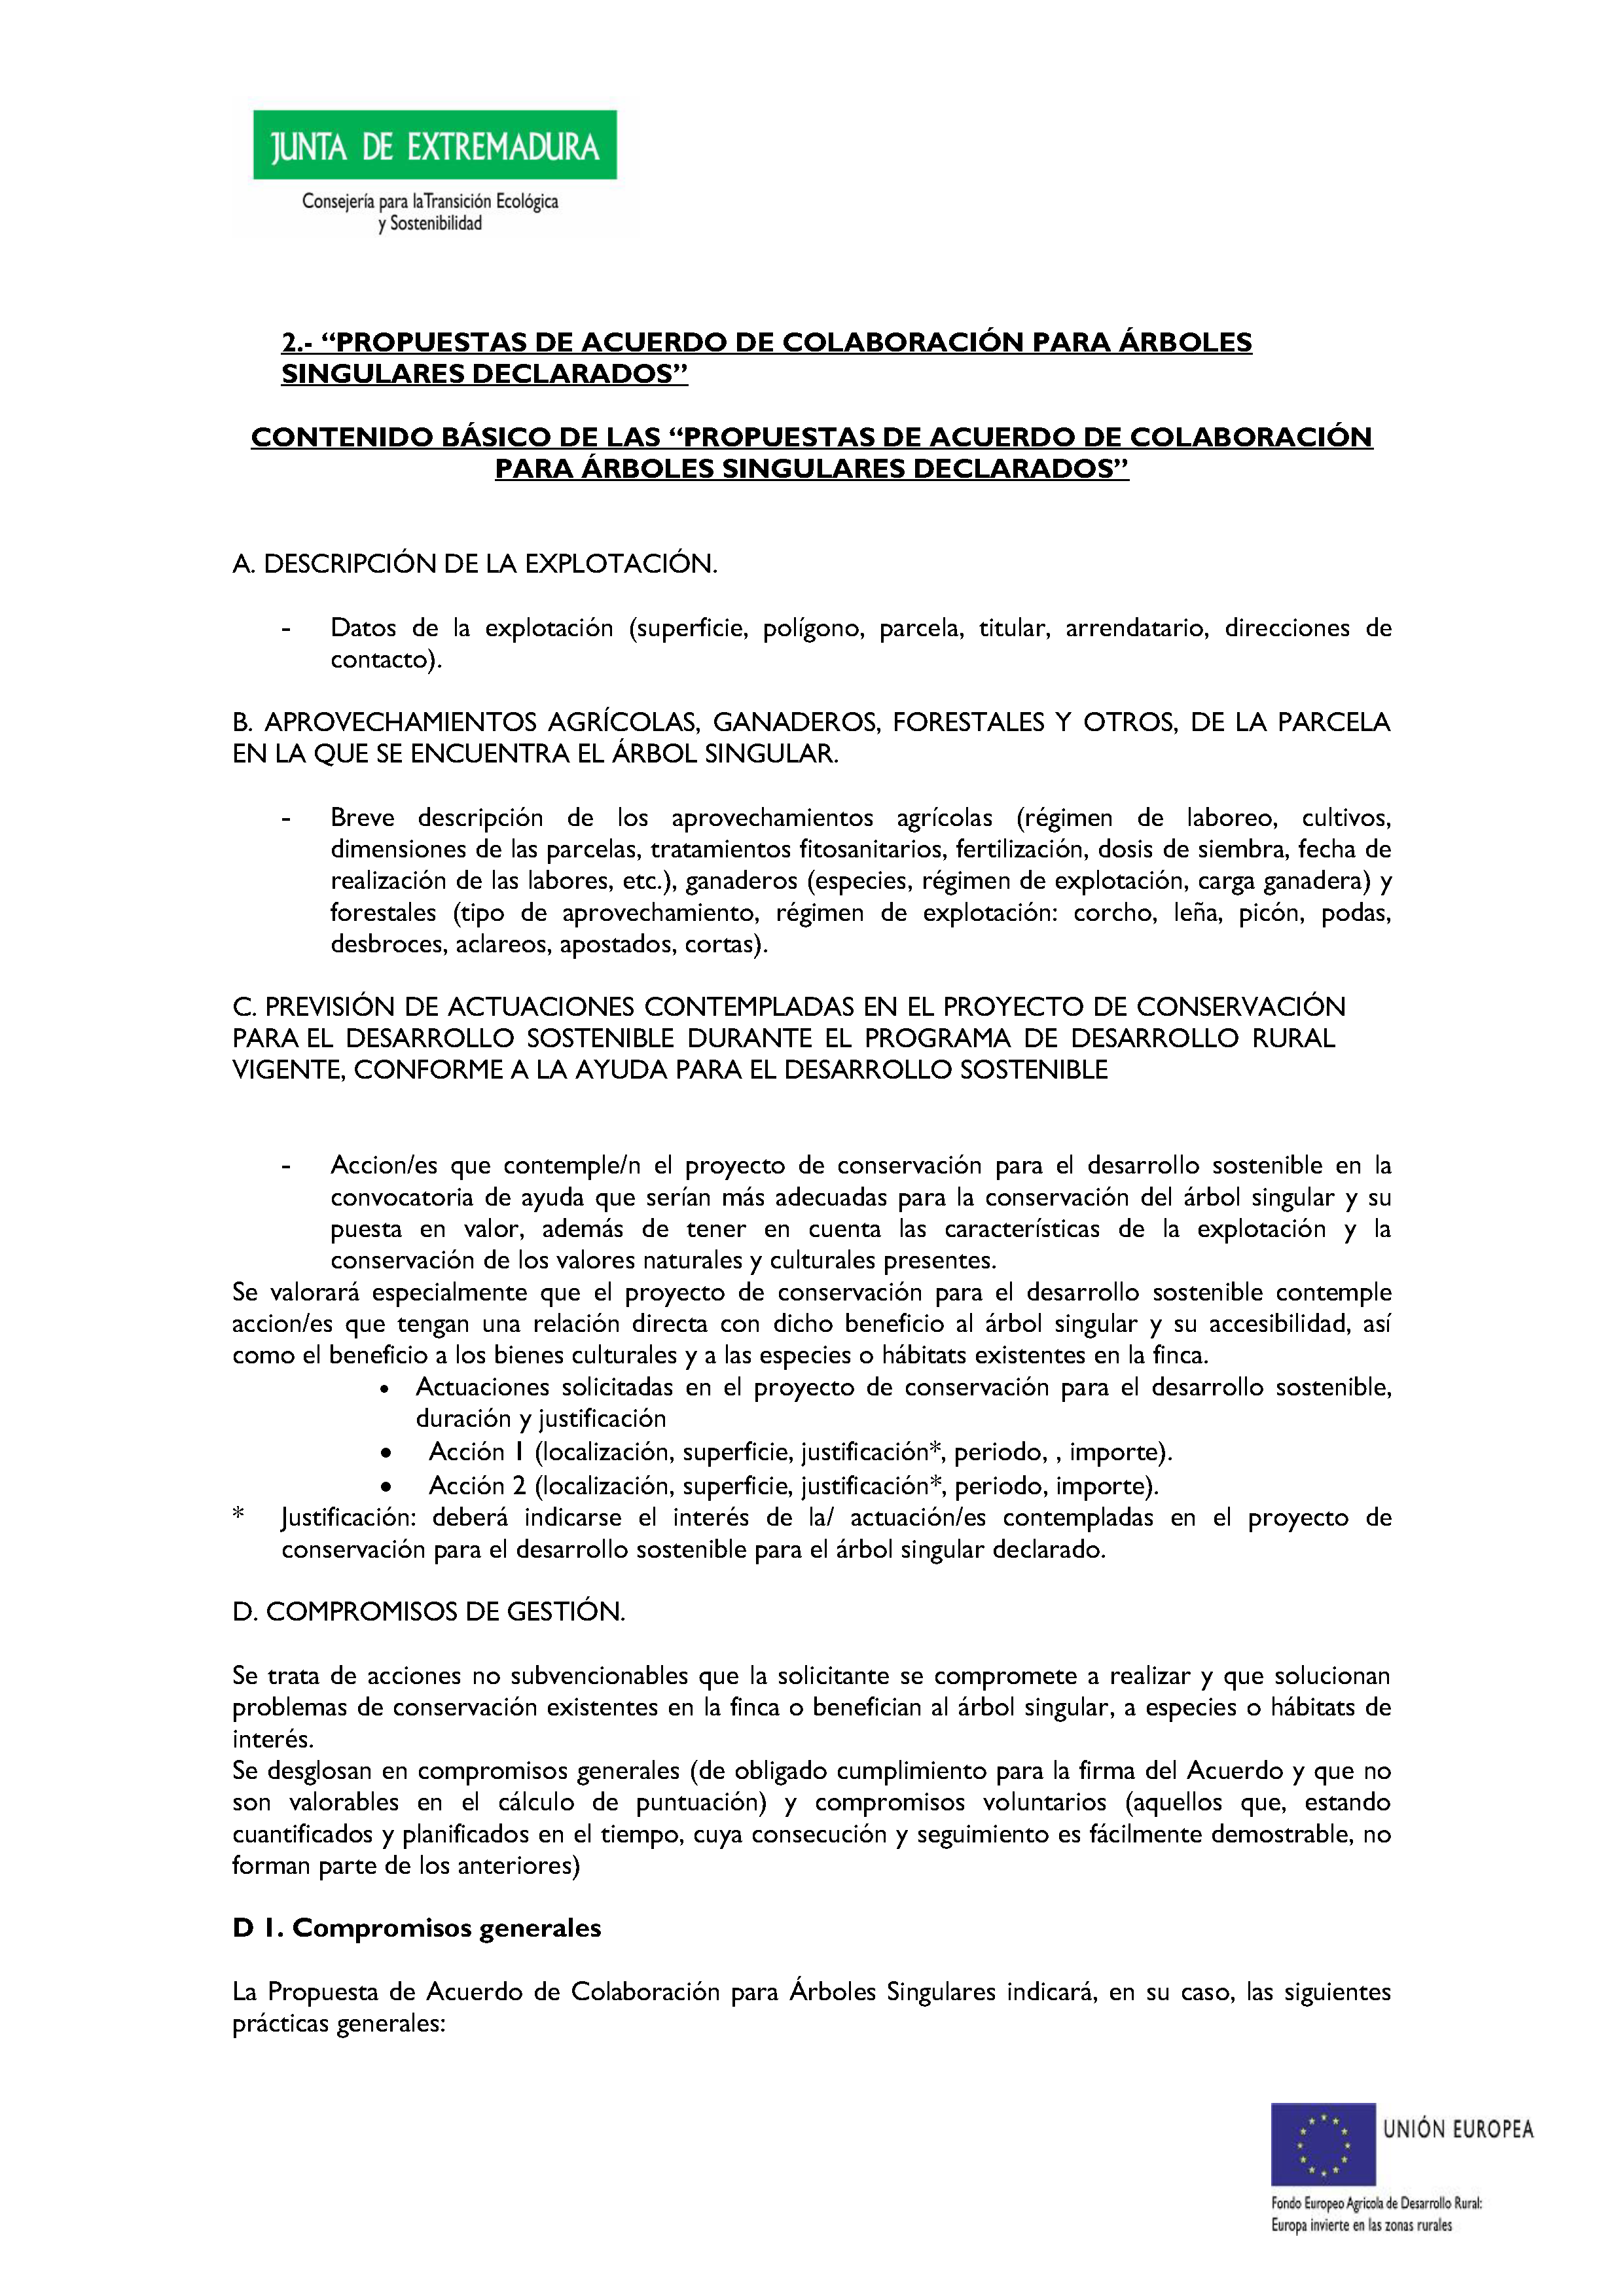 ANEXO VIII 1. PROPUESTA DE ACUERDO DE COLABORACIÓN PARA EL DESARROLLO SOSTENIBLE Pag 5